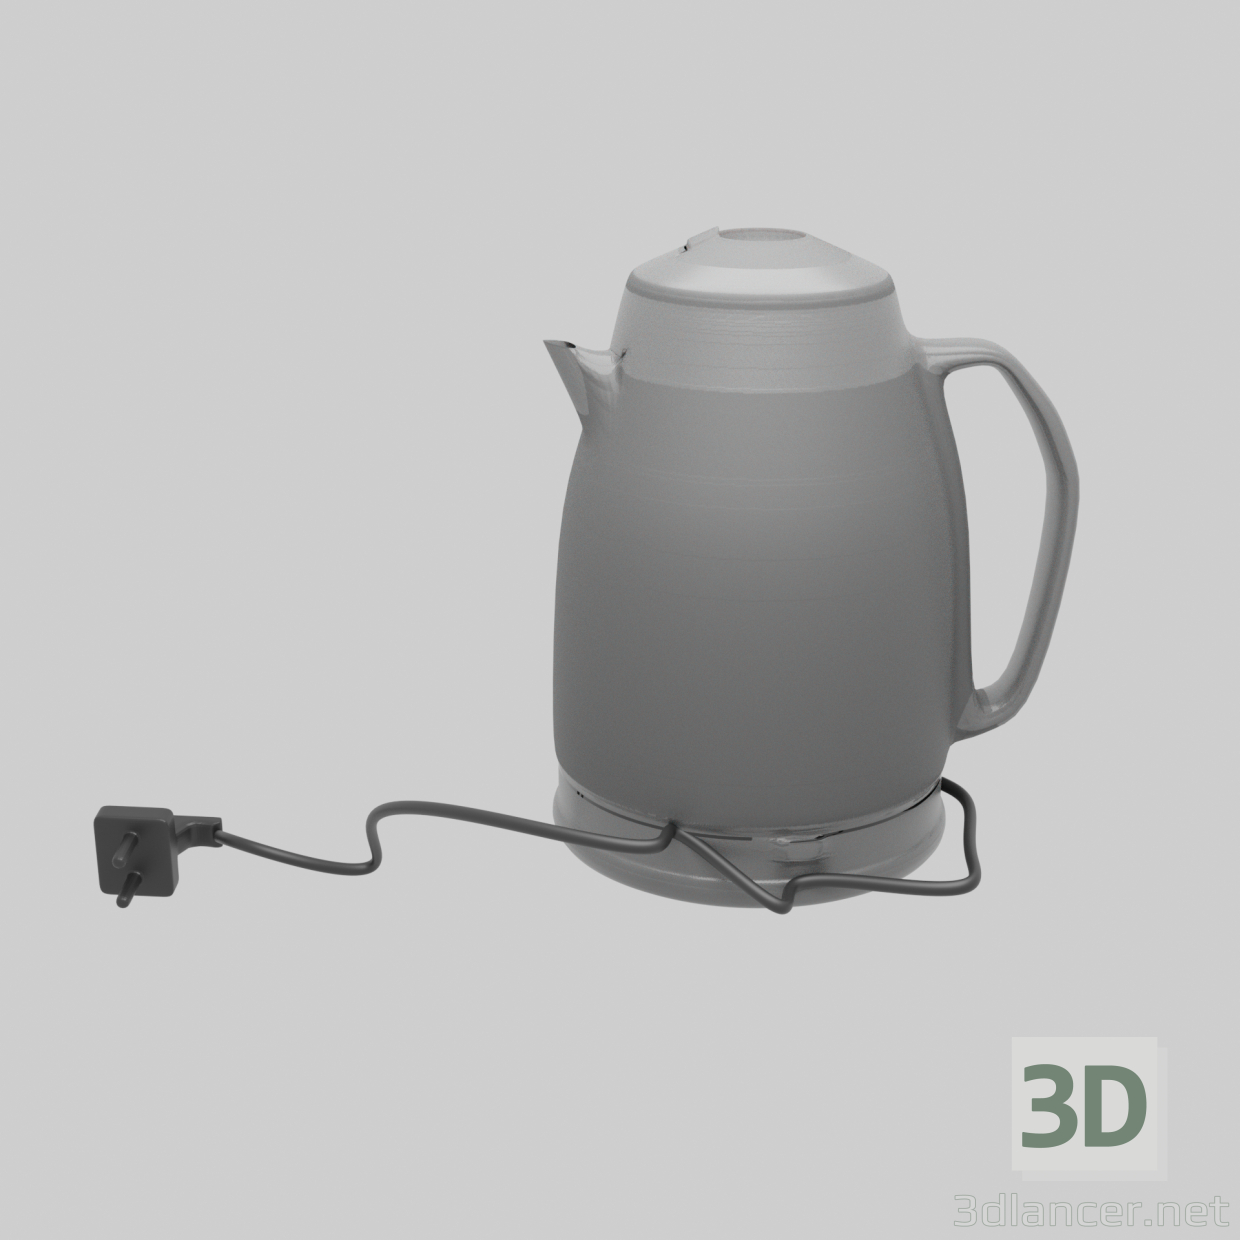 Wasserkocher 3D-Modell kaufen - Rendern